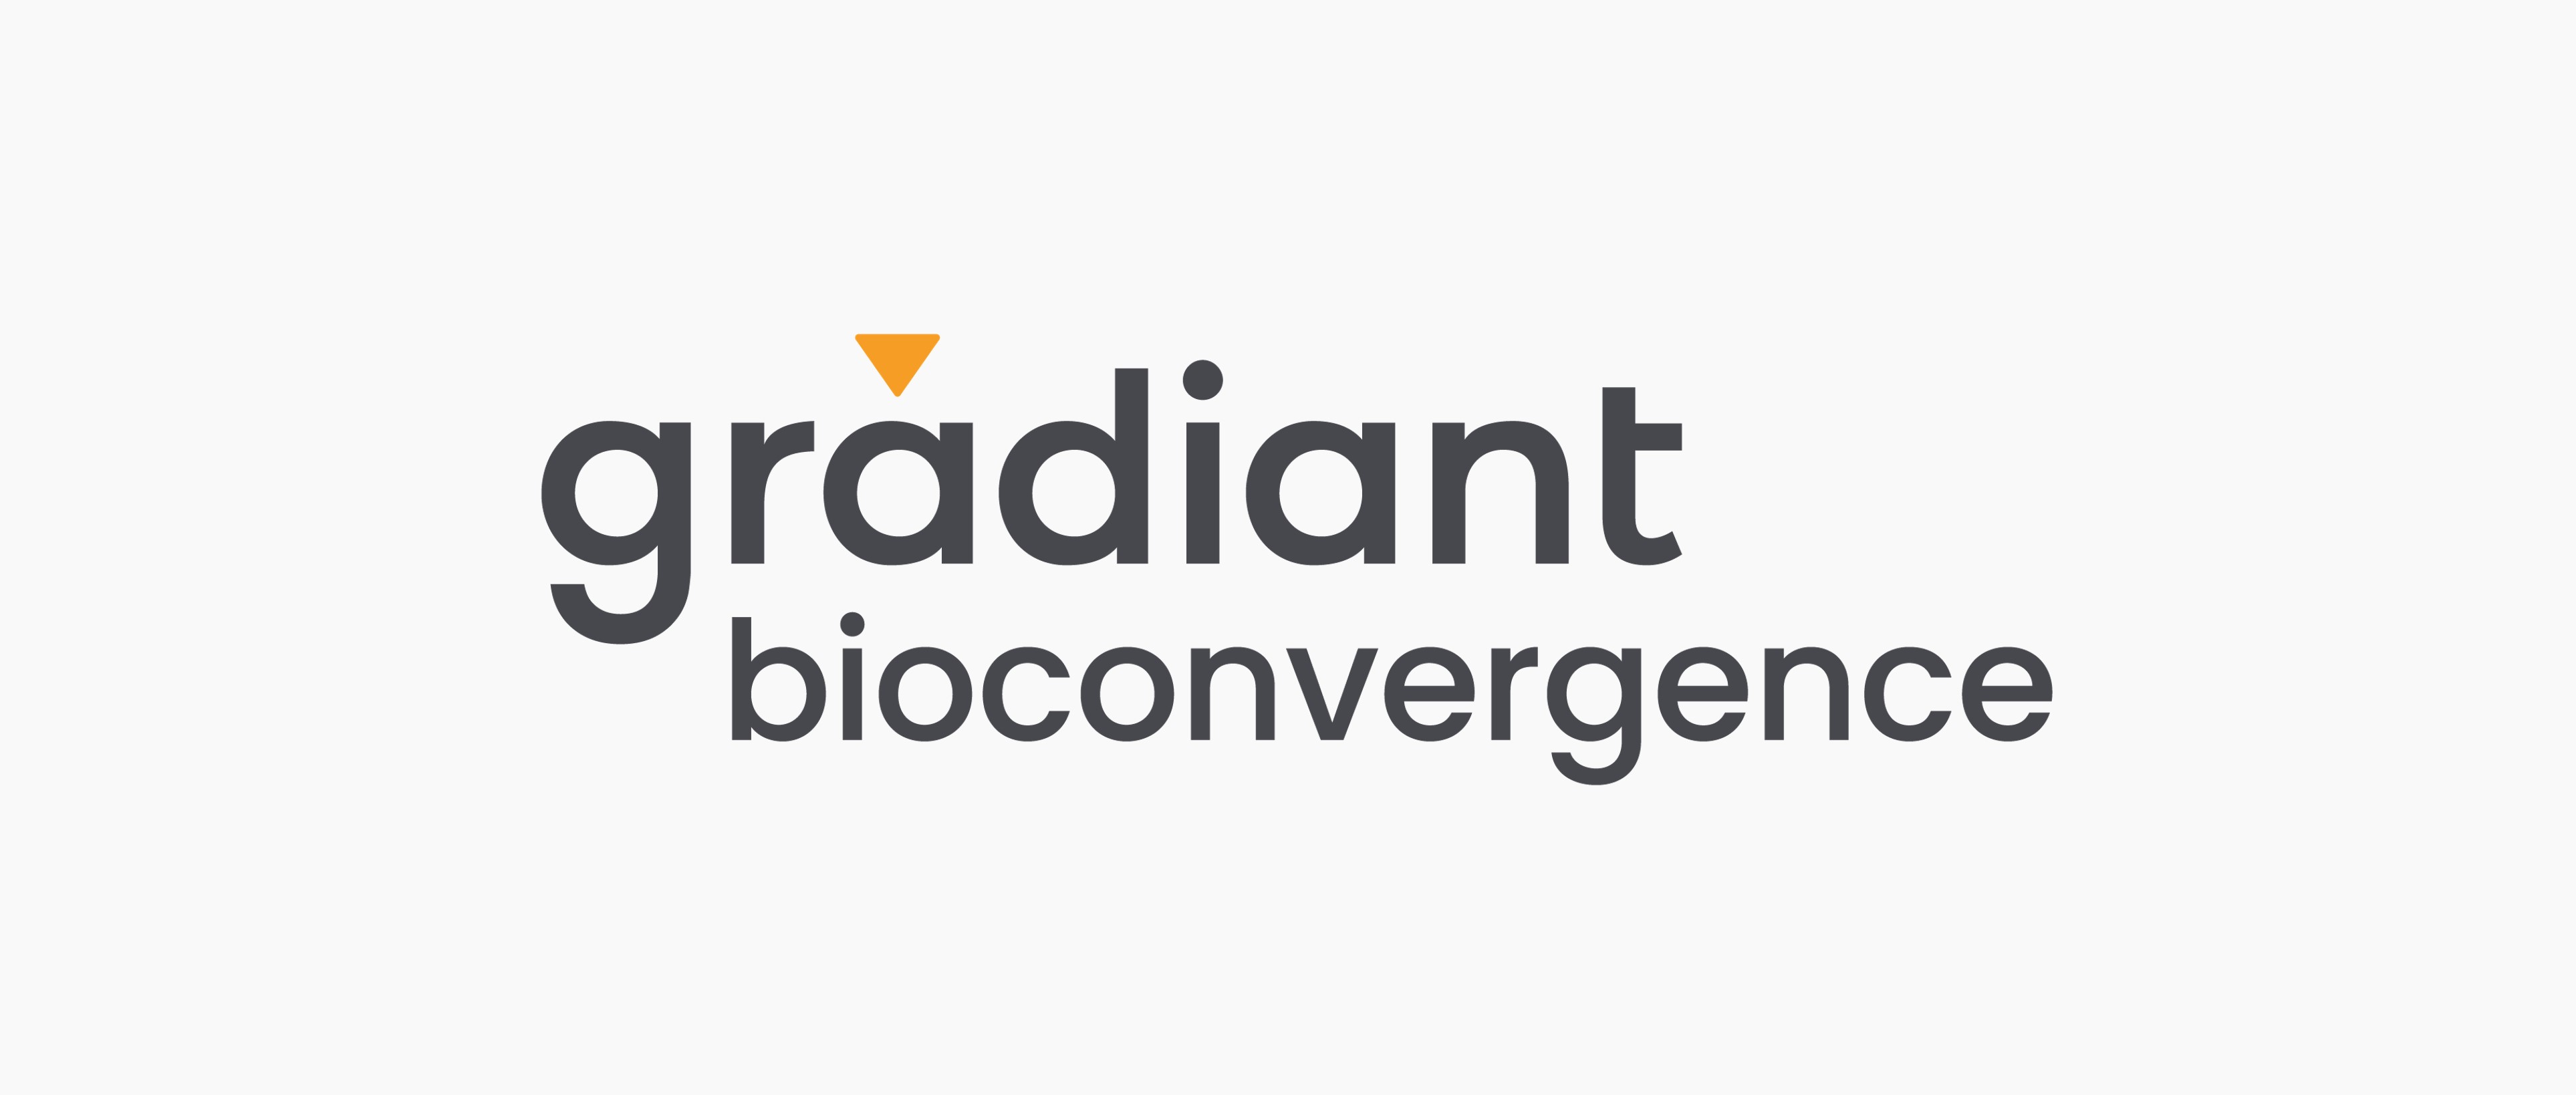 Gradiant Bioconvergence